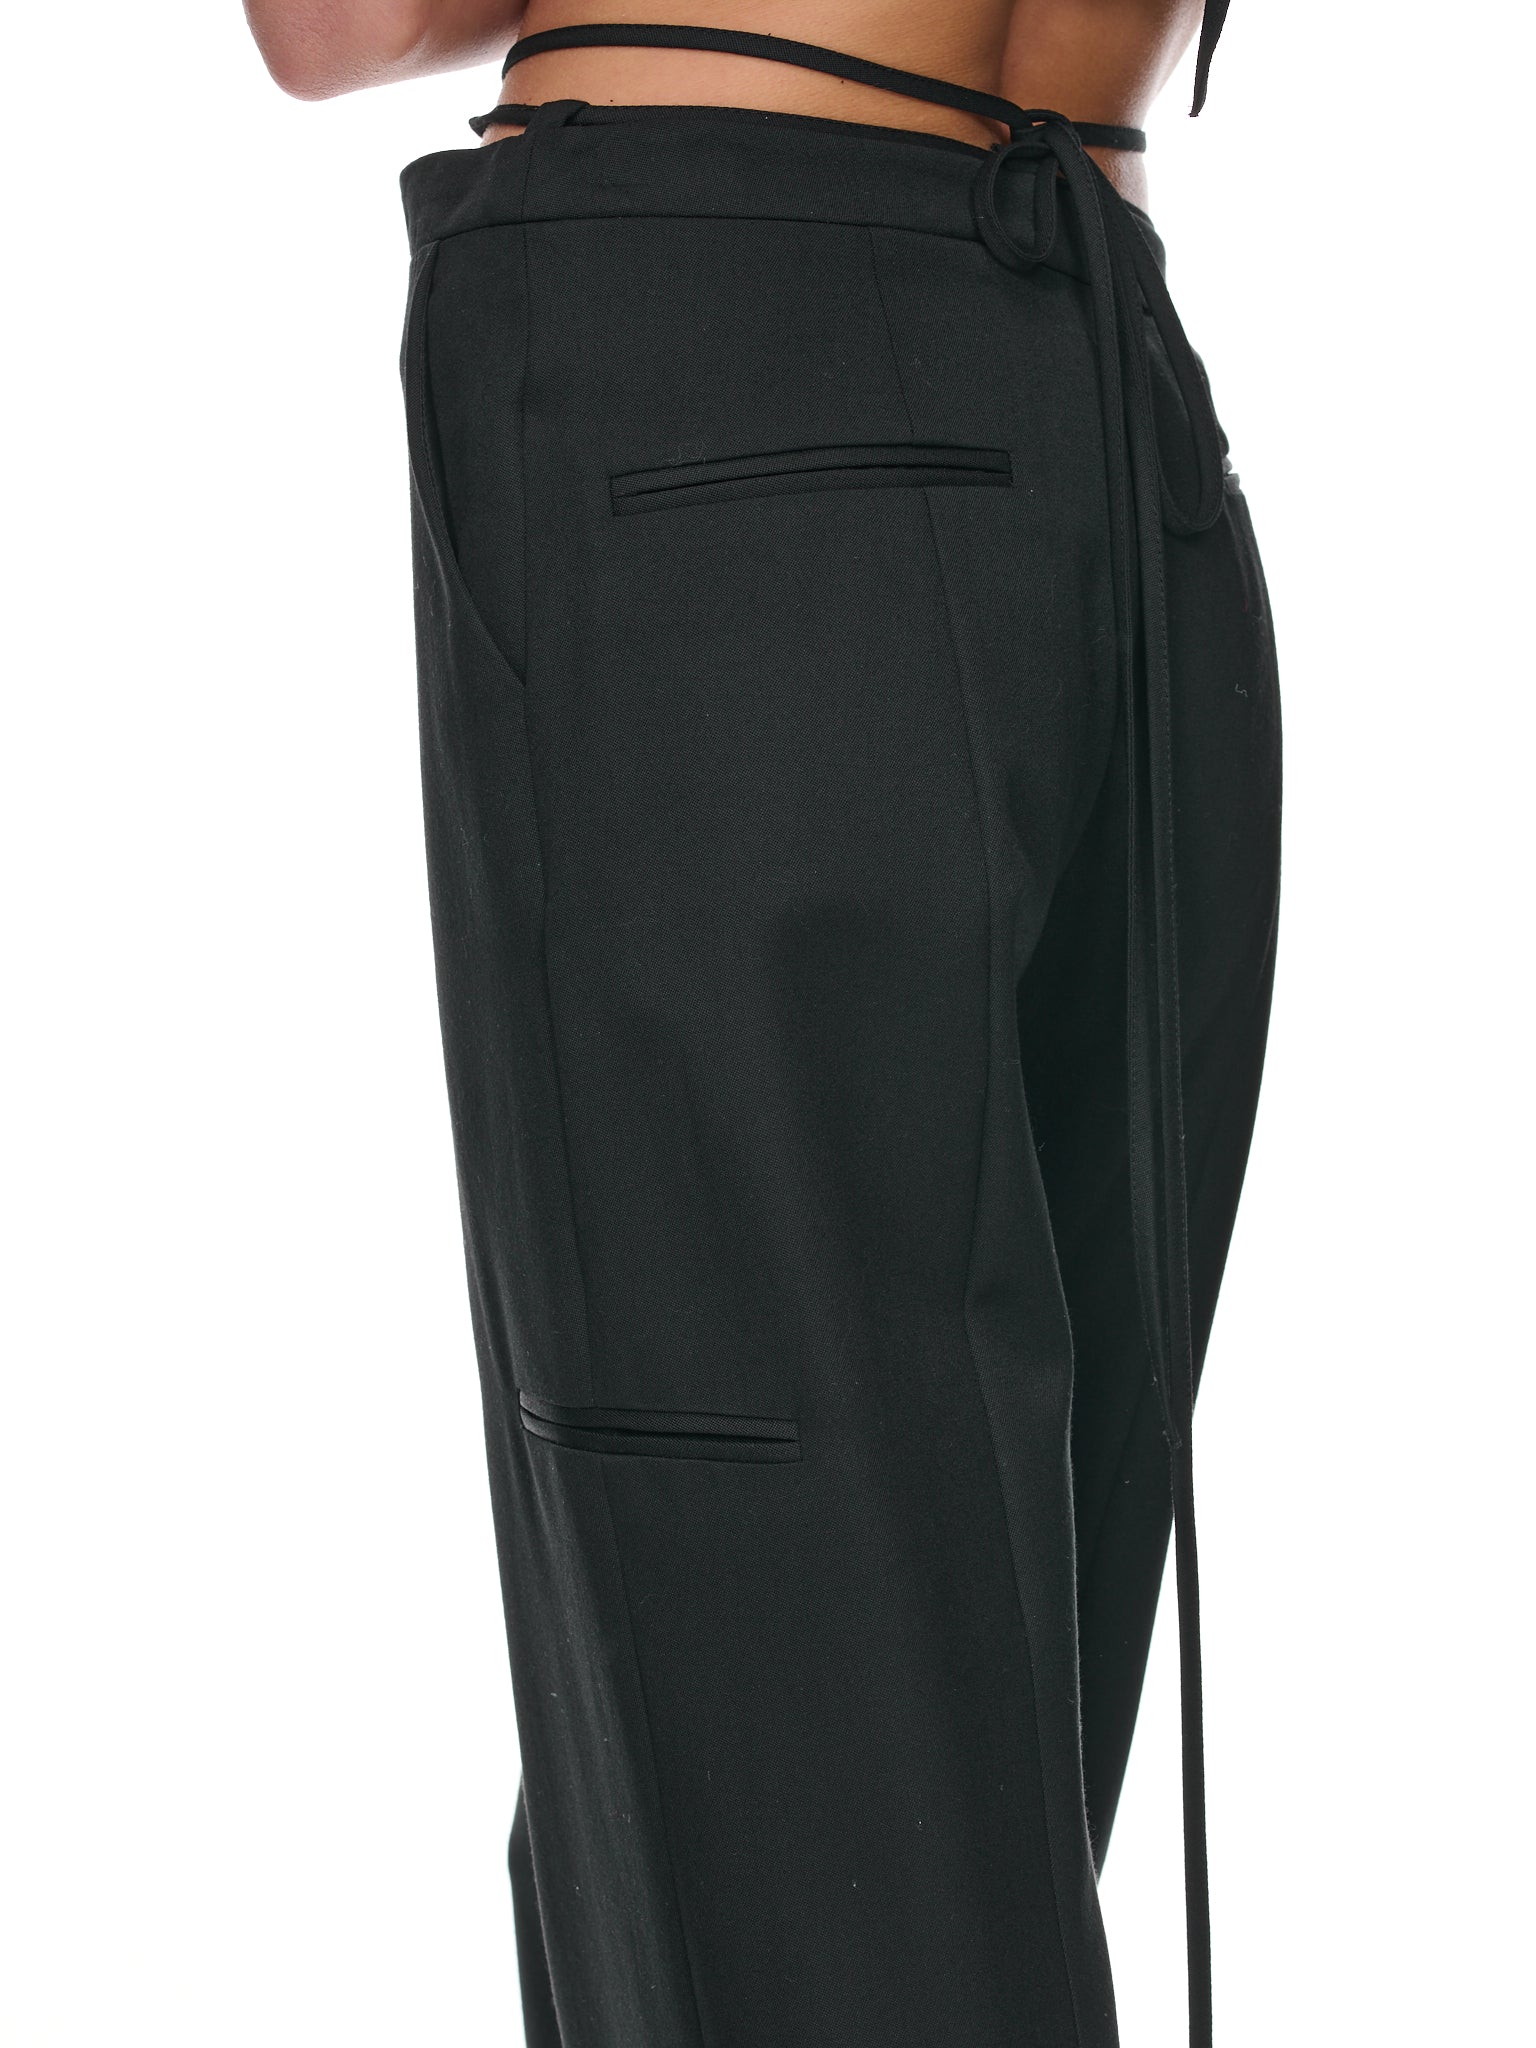 Asymmetric Tailored Trousers (P003-BLACK)